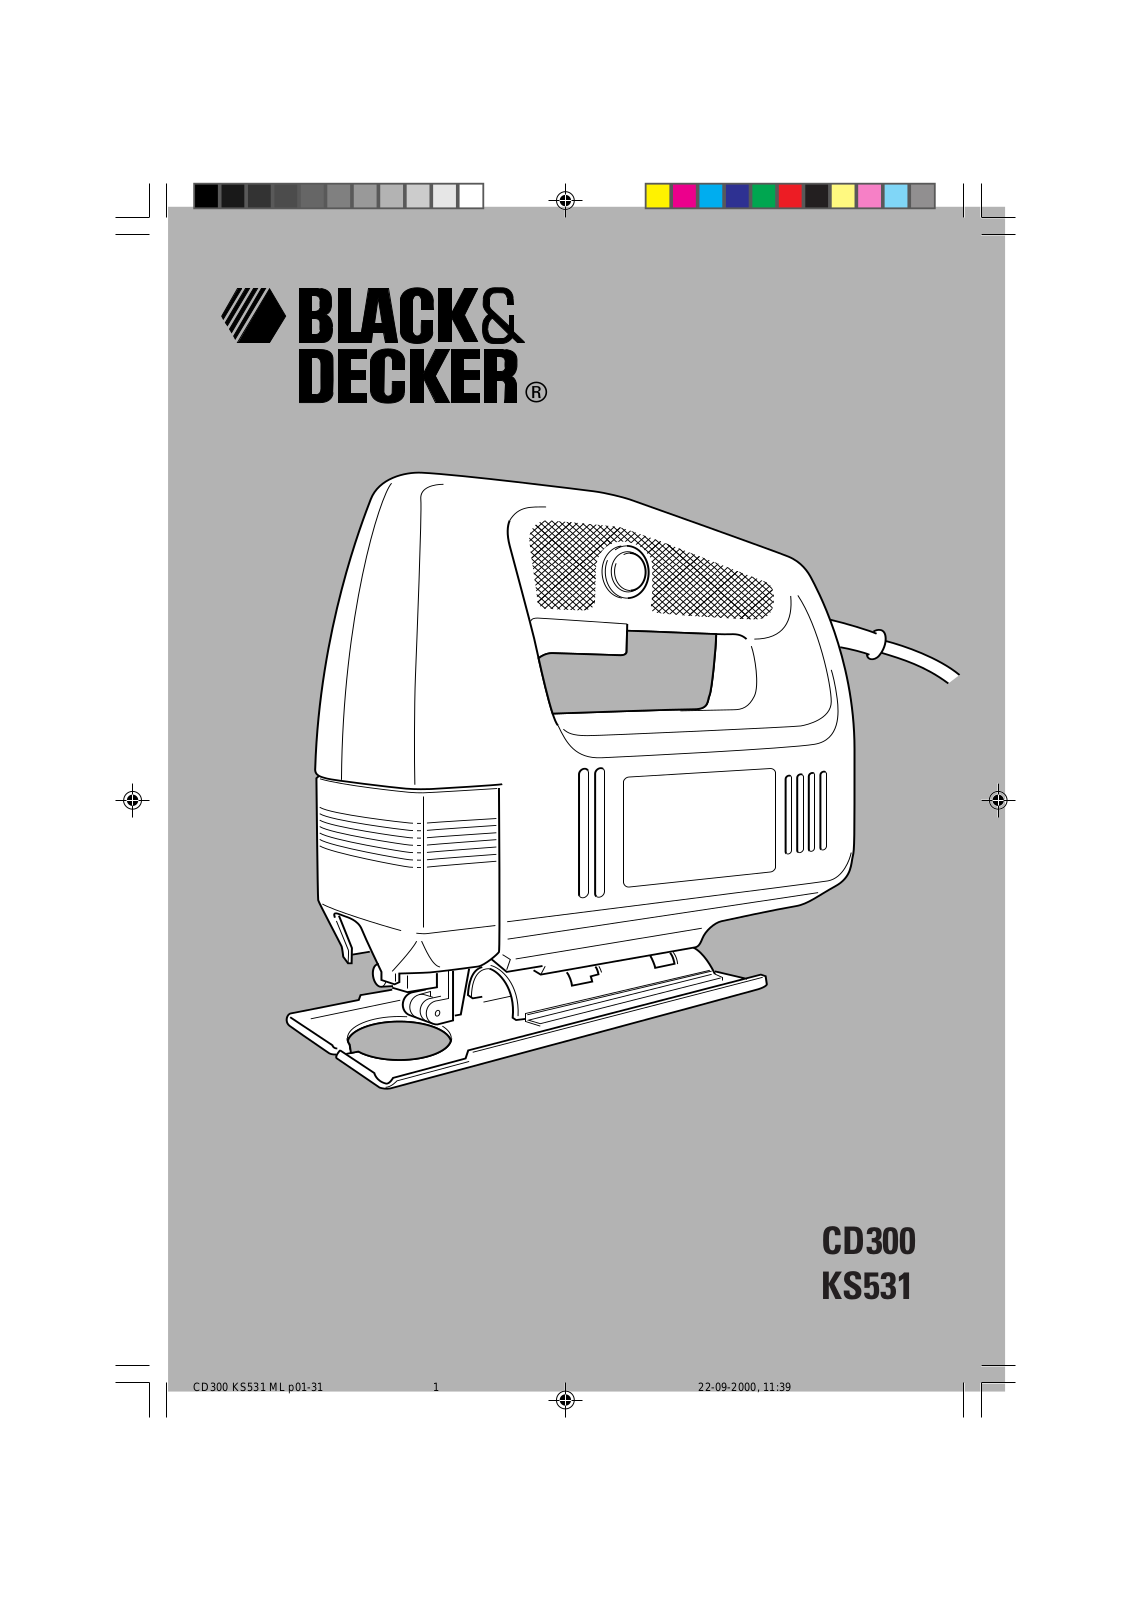 Black & Decker CD300 User Manual